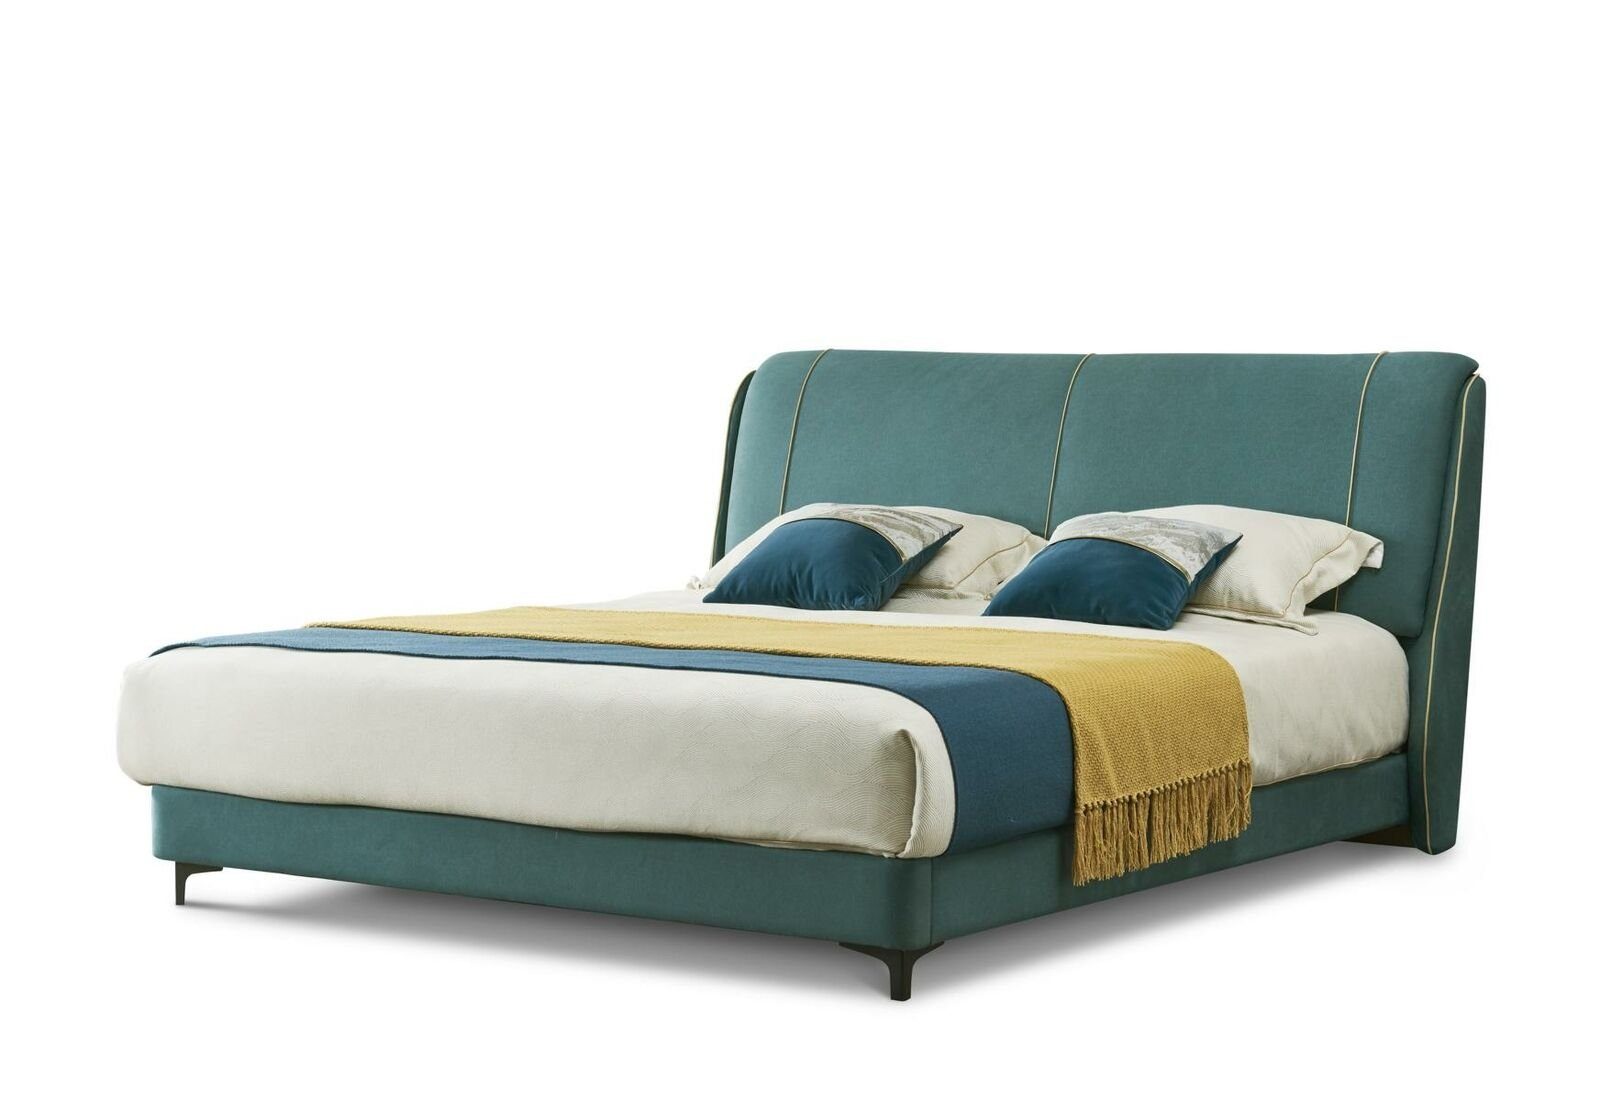 JVmoebel Bett, Bett Polsterbett Luxus Schlafzimmer Design Betten Textil Leder